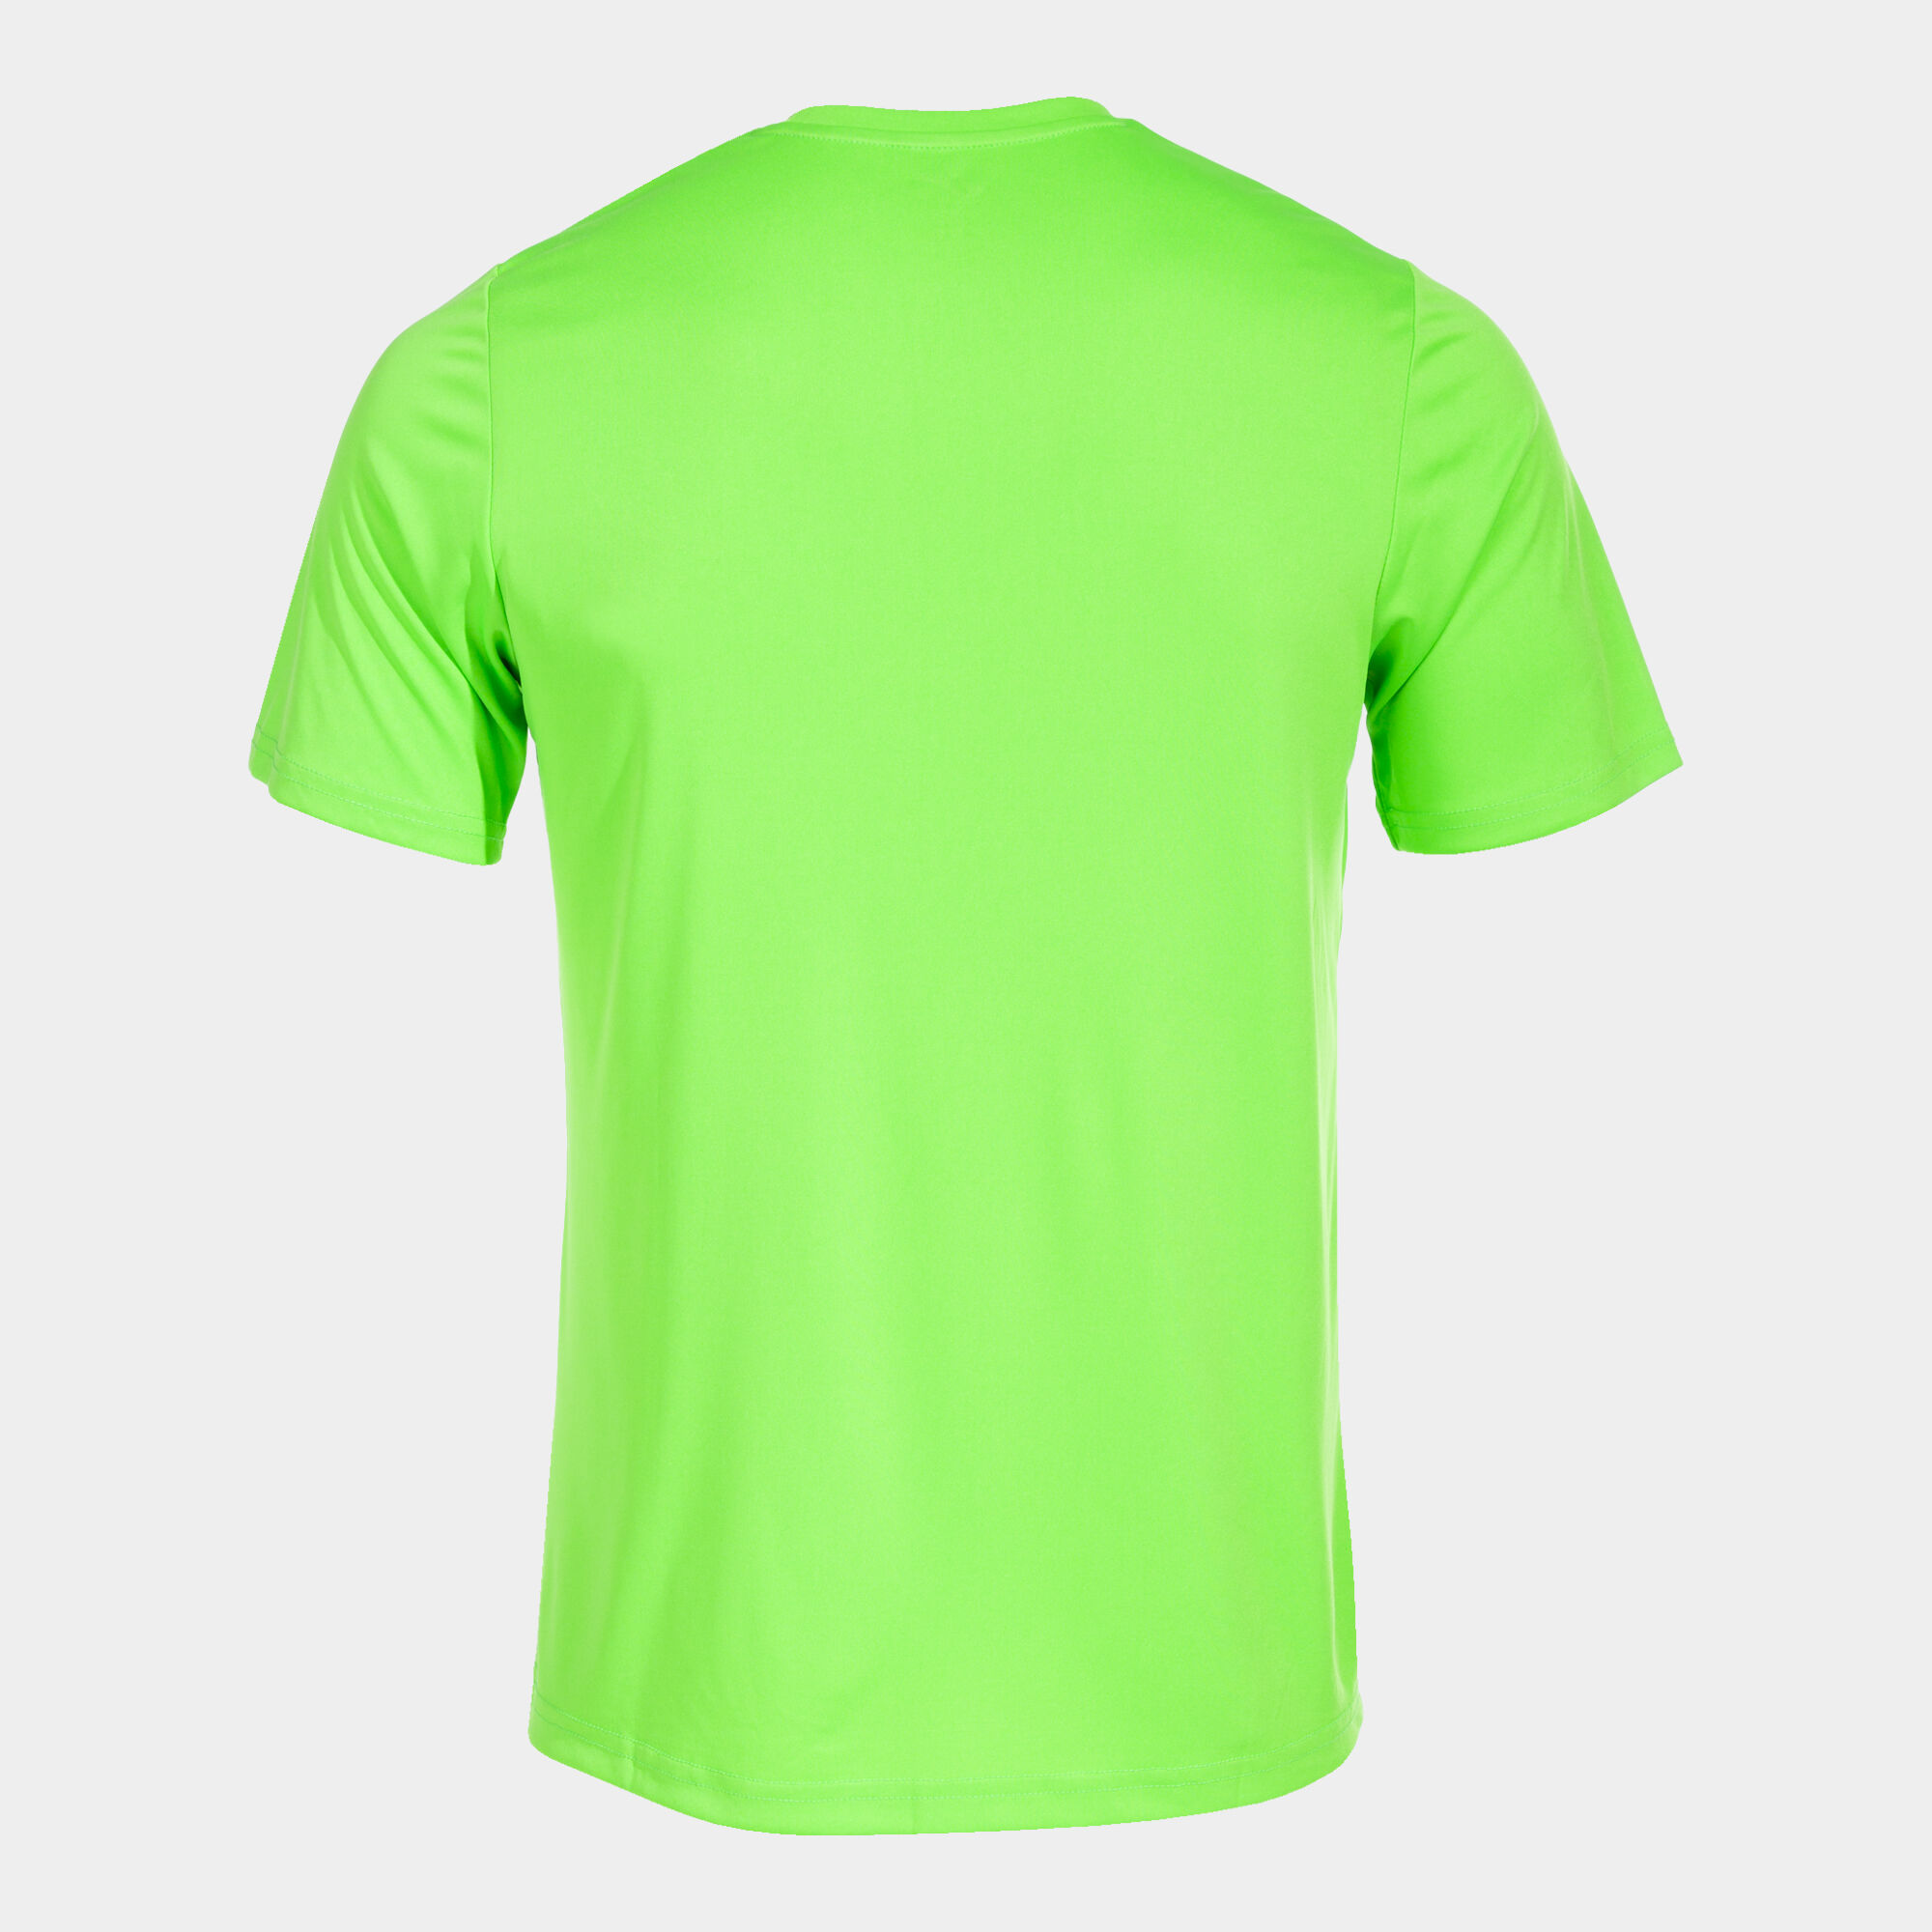 Joma Combi Camiseta de Tenis Niño - Fluo Green/Black